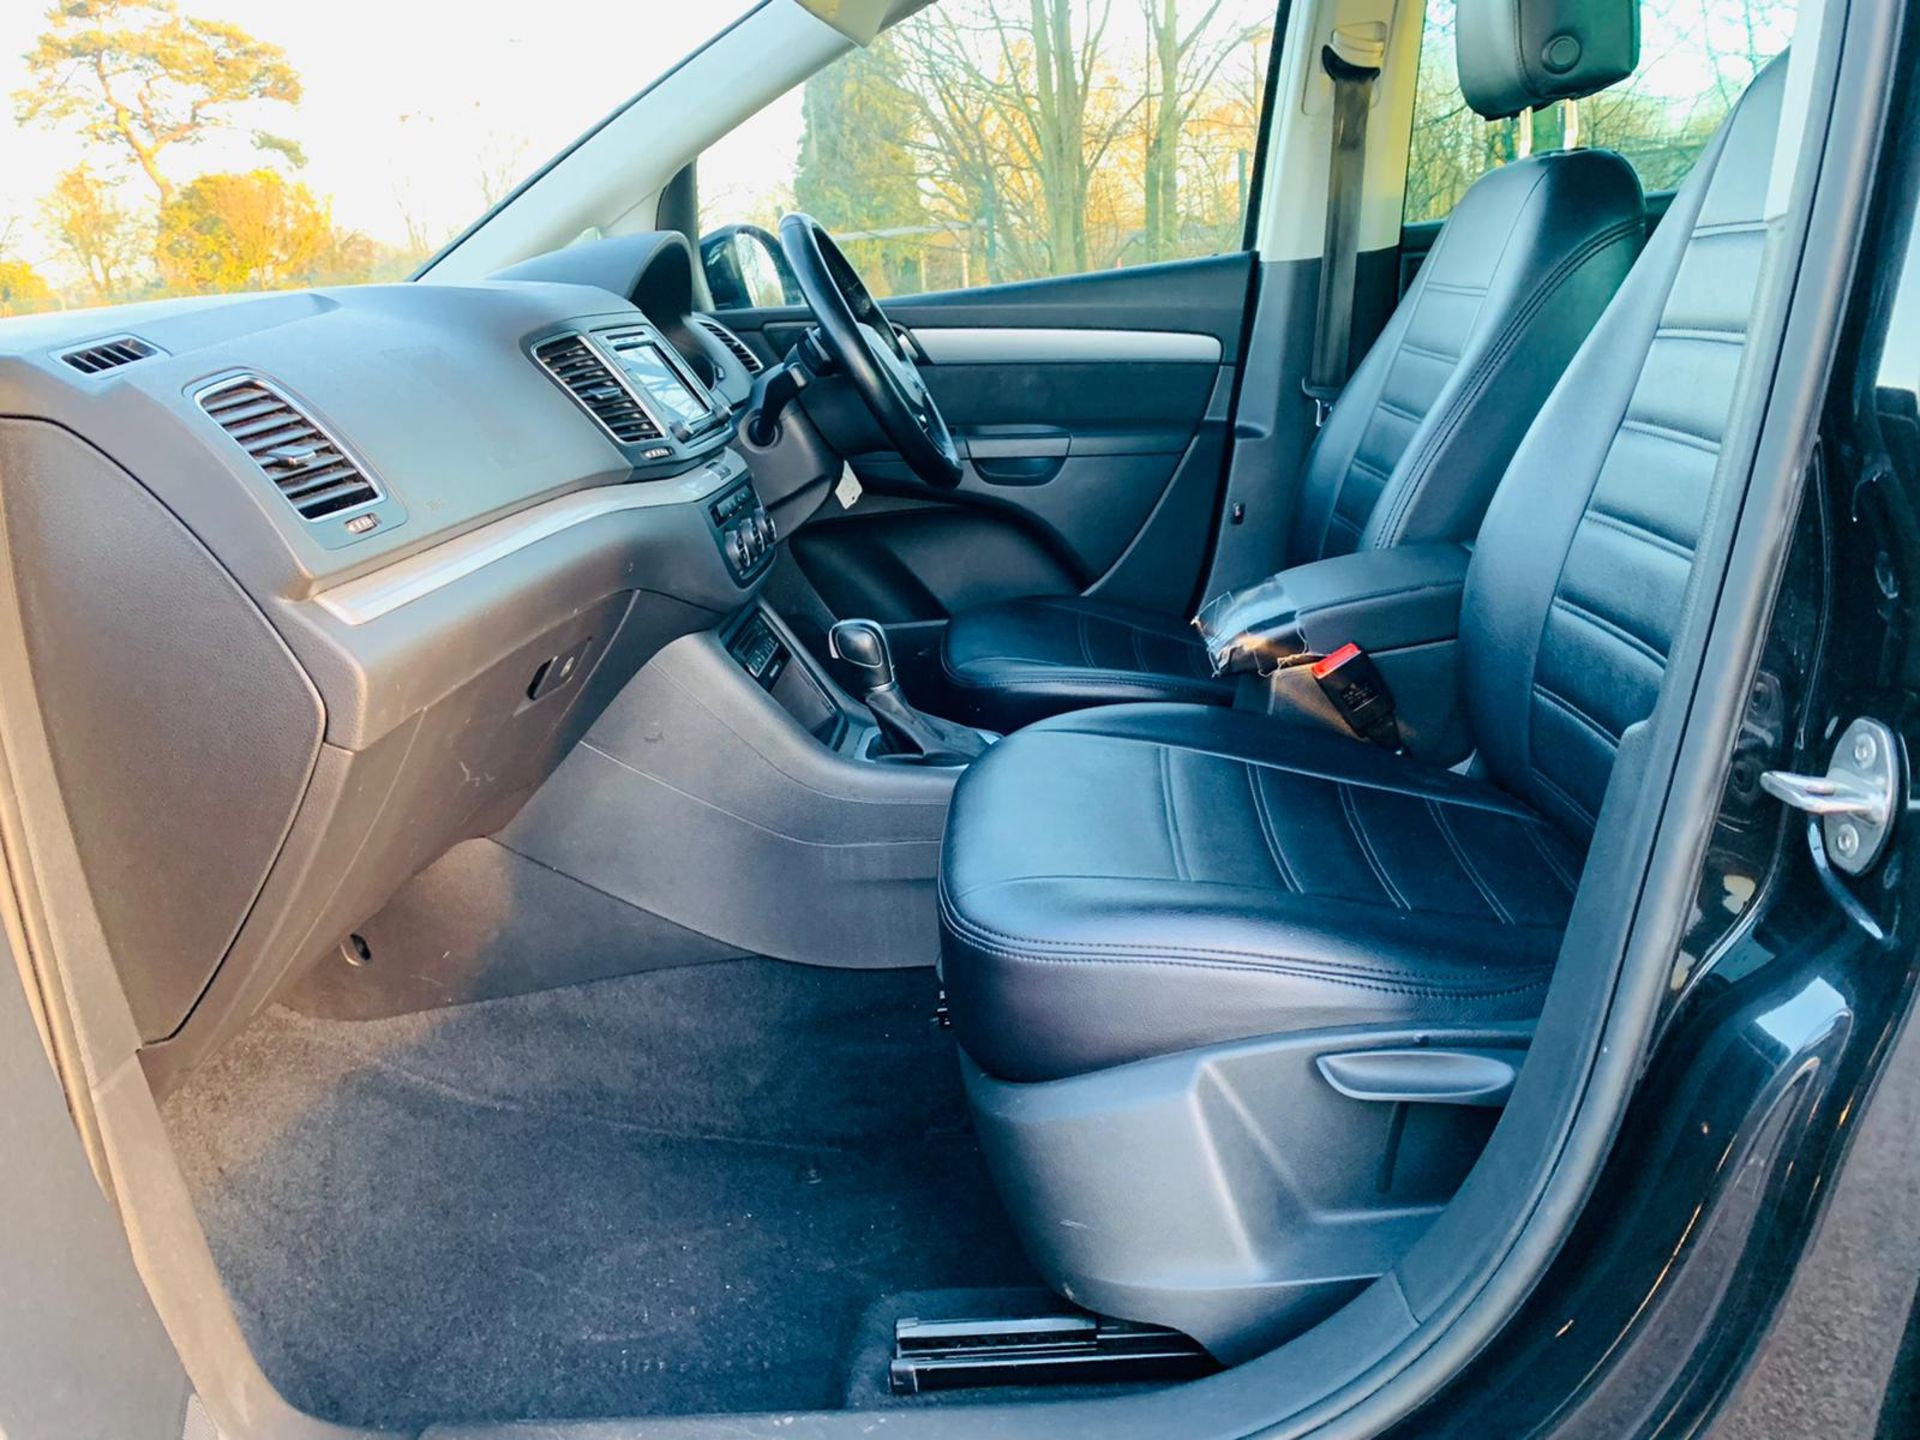 (RESERVE MET) Volkswagen Sharan SE 2.0 TDI Bluemotion (MPV) 7 Seats - 2017 17 Reg - Parking Sensors - Image 14 of 25